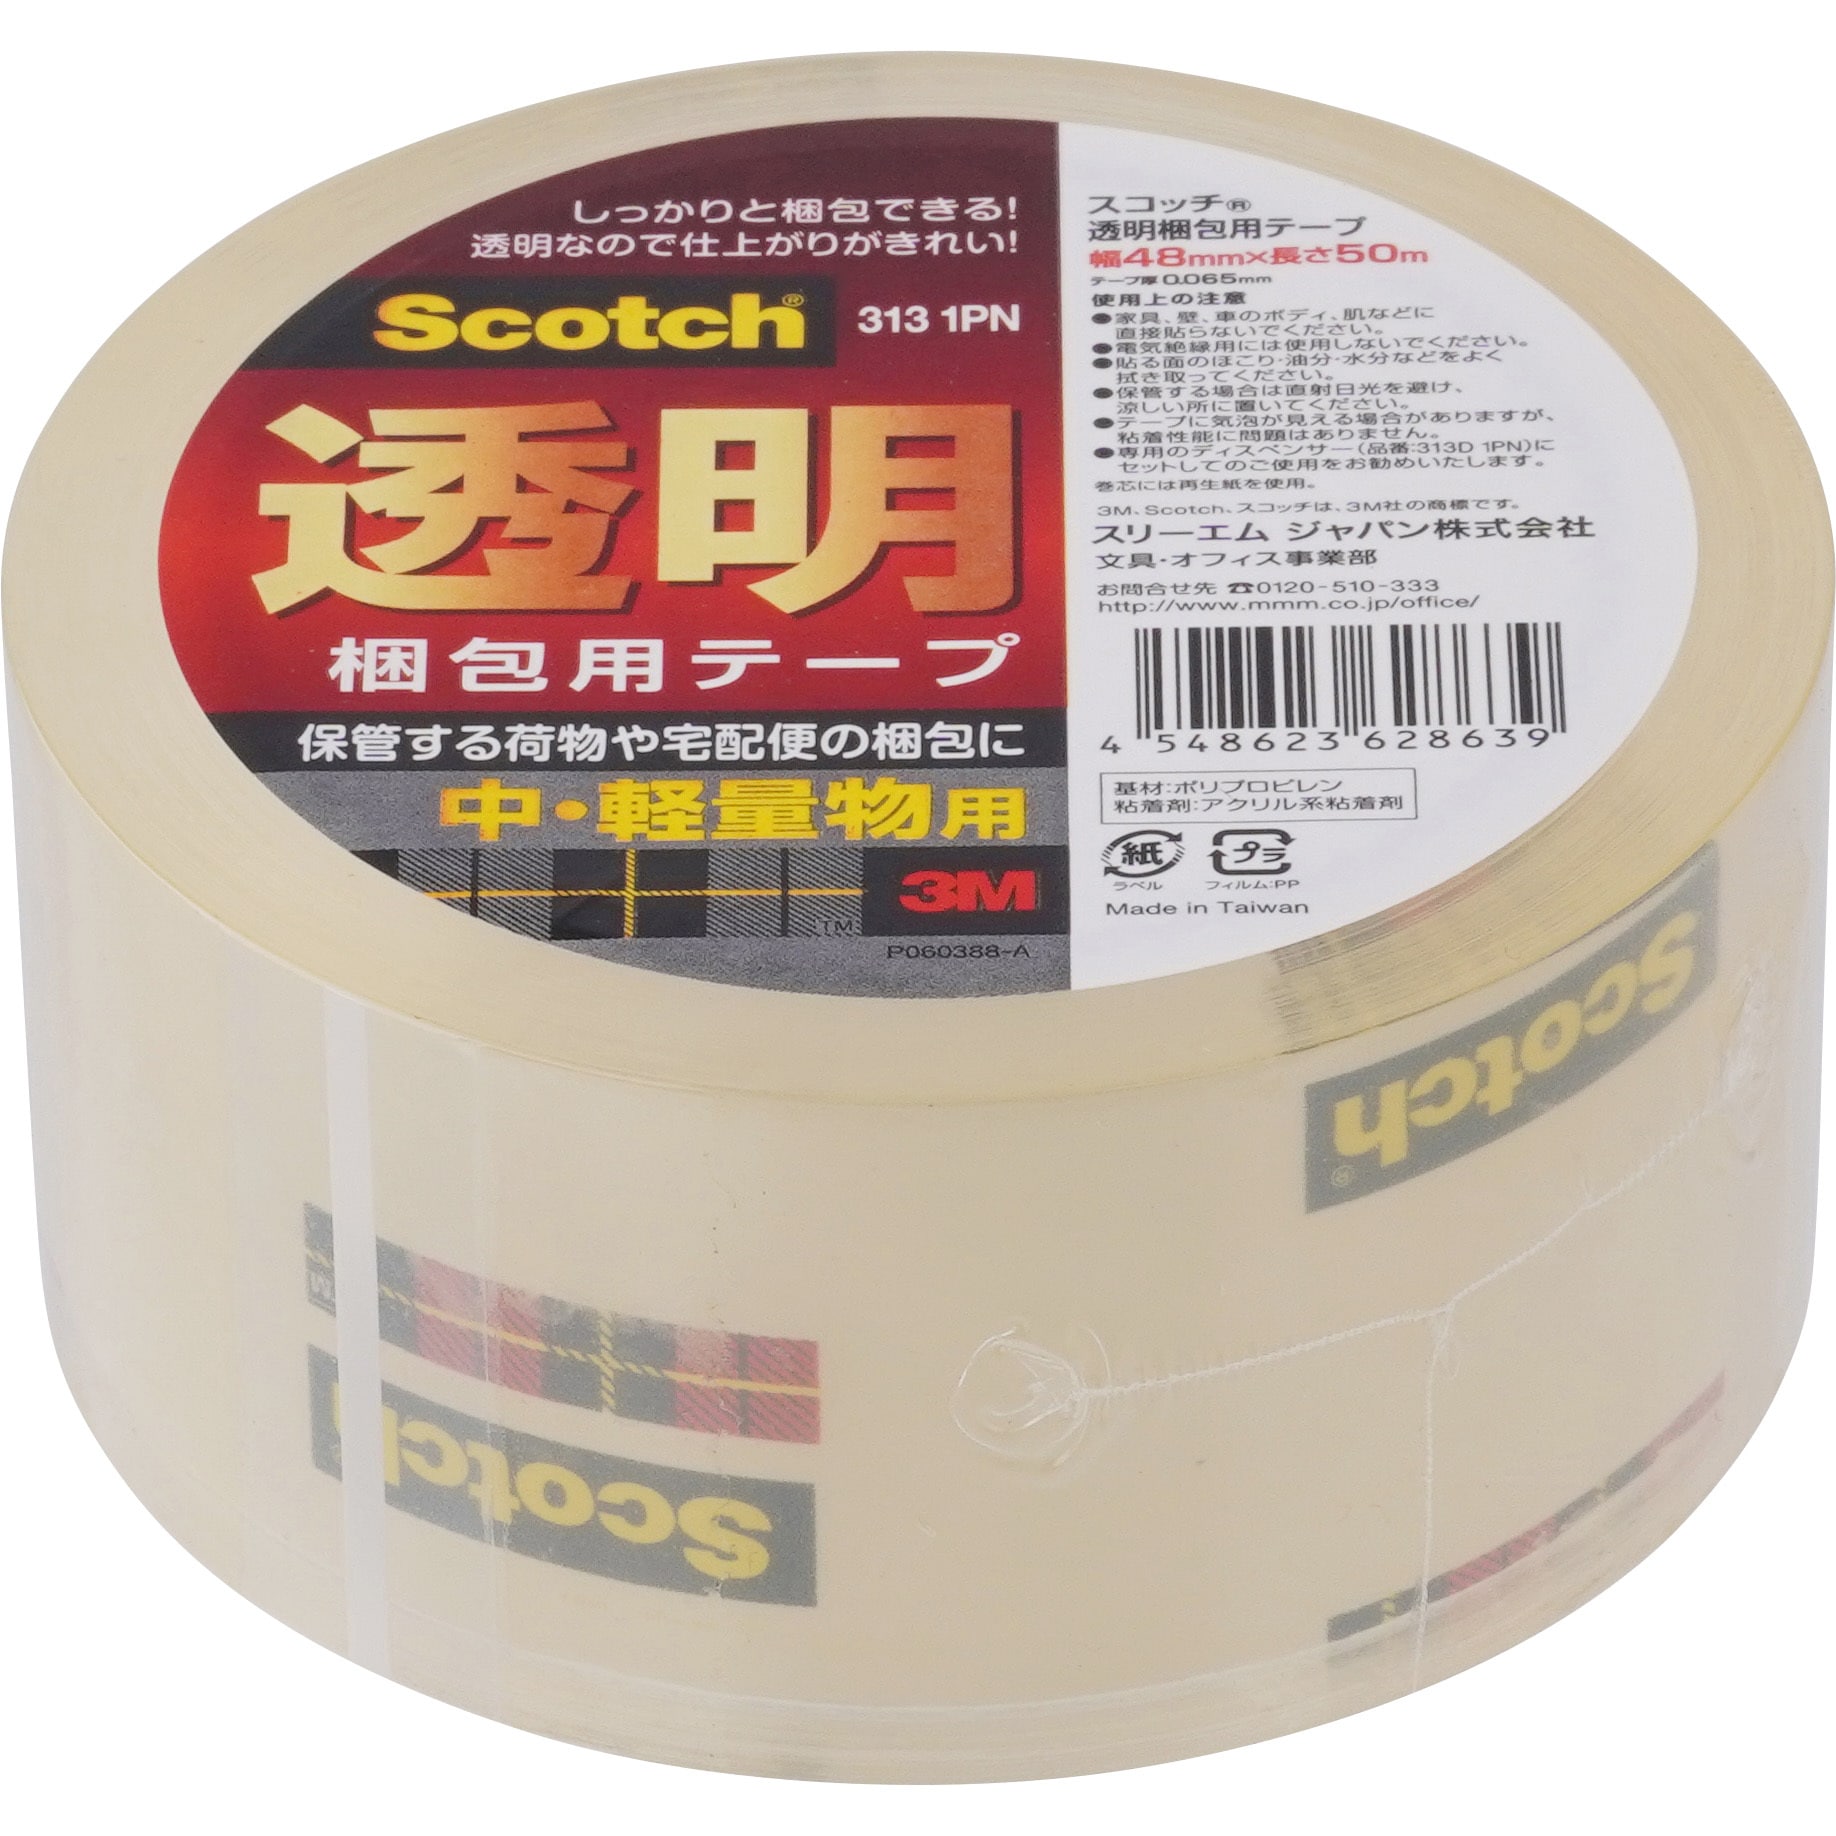 3M スコッチ 透明梱包用粘着テープ(313) 48mm×50m 1箱（50巻入）セット - 2